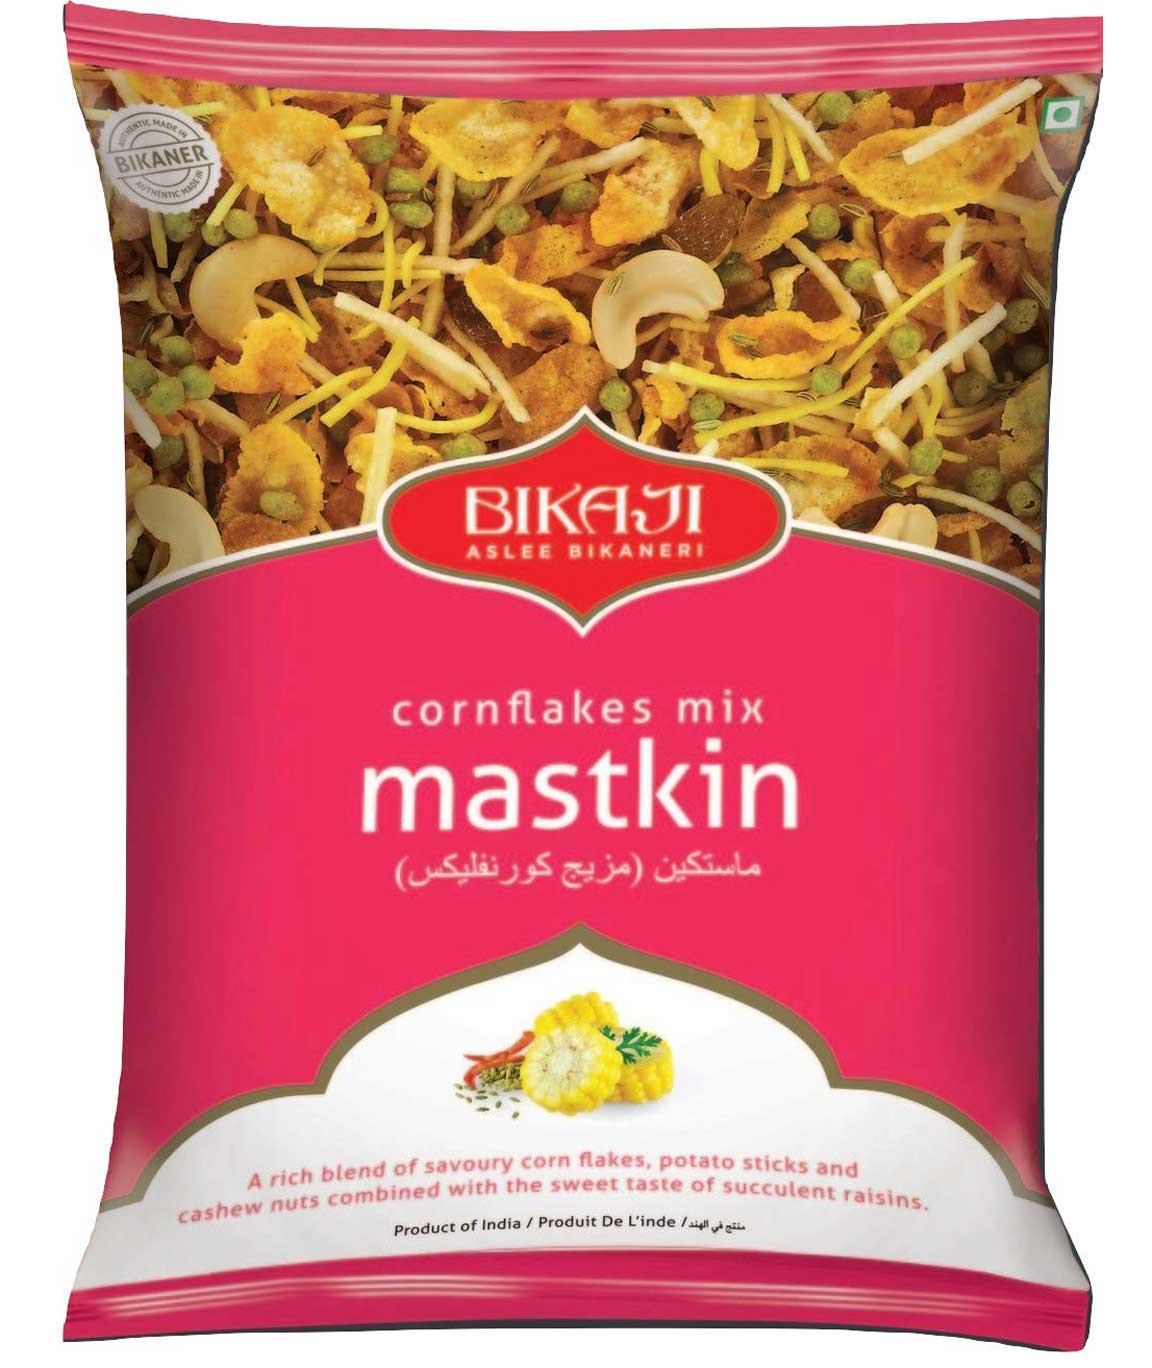 Bikaji Cornflakes Mix Mastkin 100% Vegetarian Indian Namkeen Snack 750g (Pack of 5 x 150g)